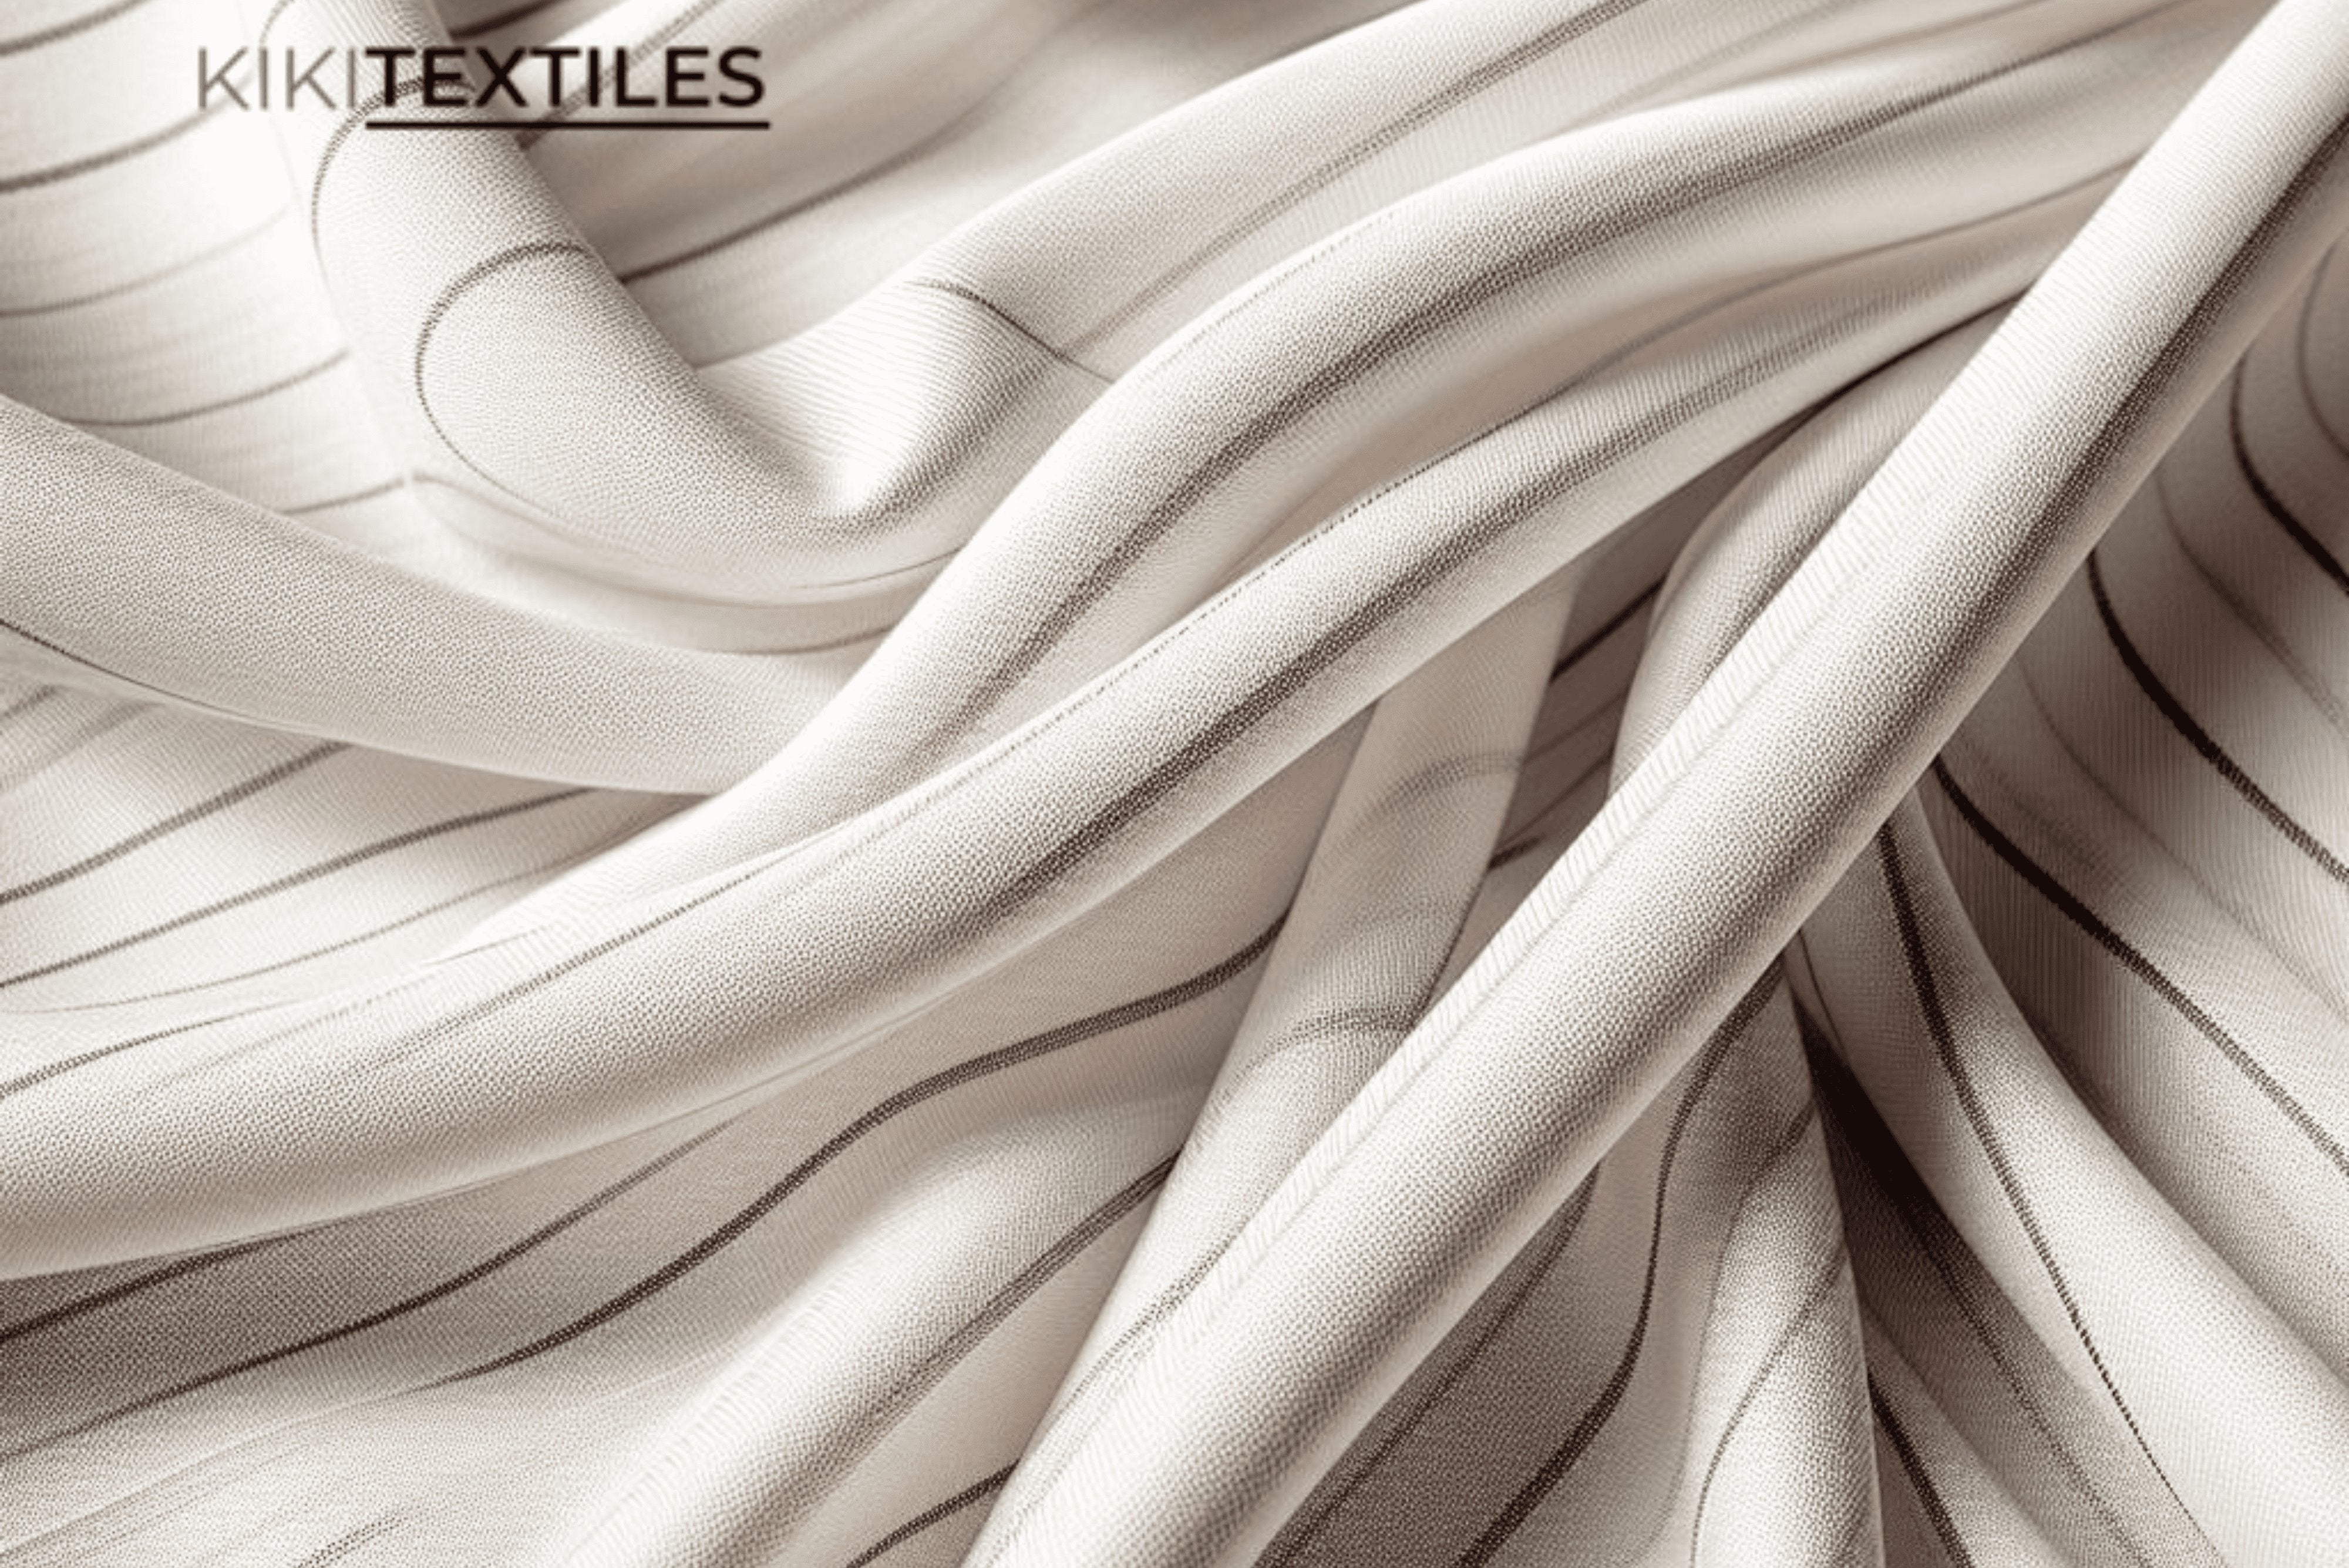 Is Nylon Stretchy? A Closer Look at Nylon, Nylon Spandex, and Stretchy –  KikiTextiles